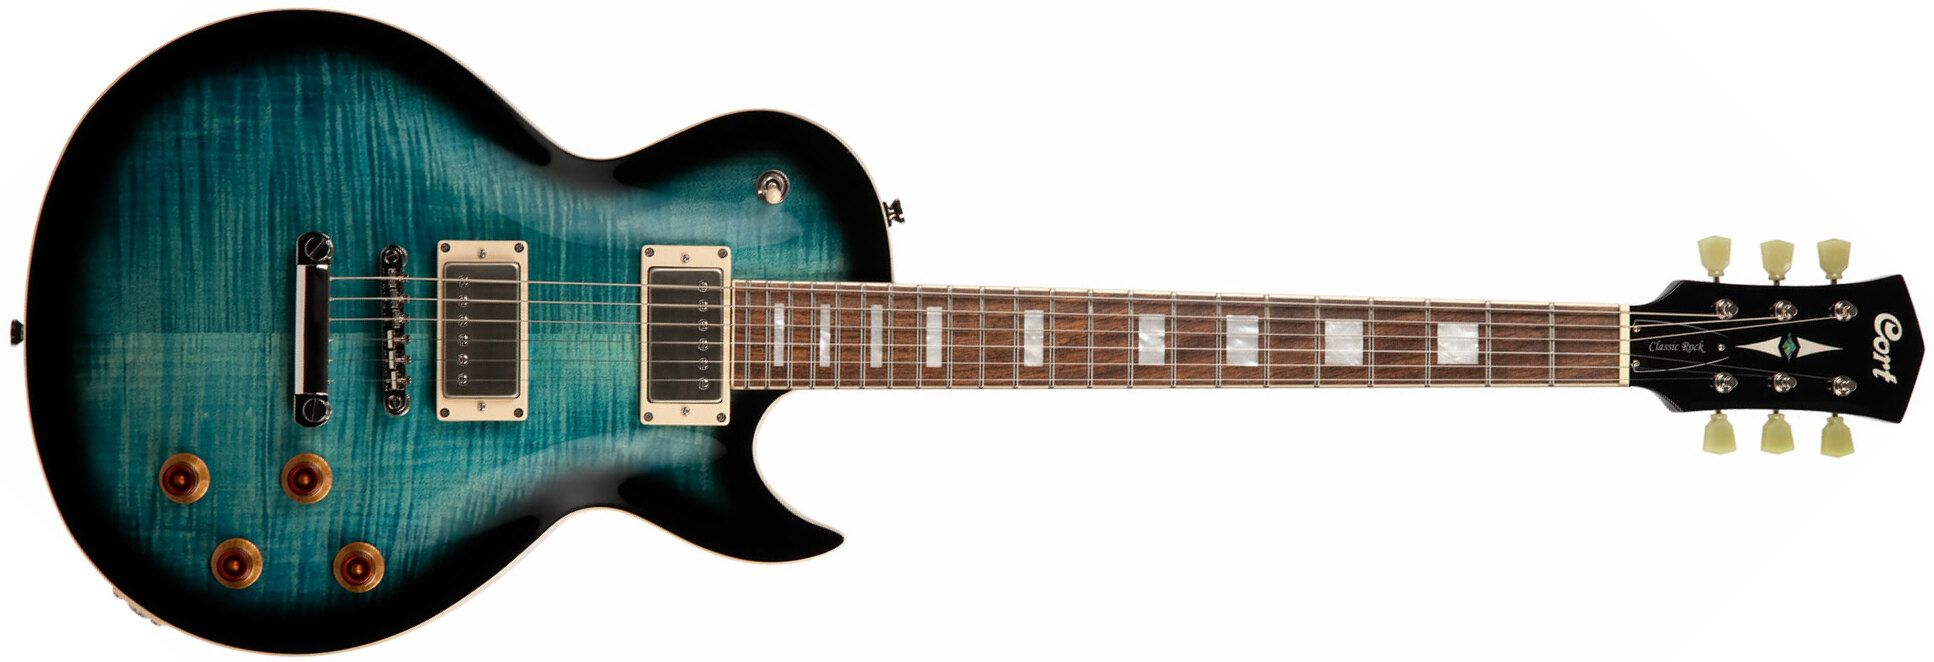 Cort Cr250 Dbb Classic Rock Ht Hh Jat - Dark Blue Burst - Single cut electric guitar - Main picture